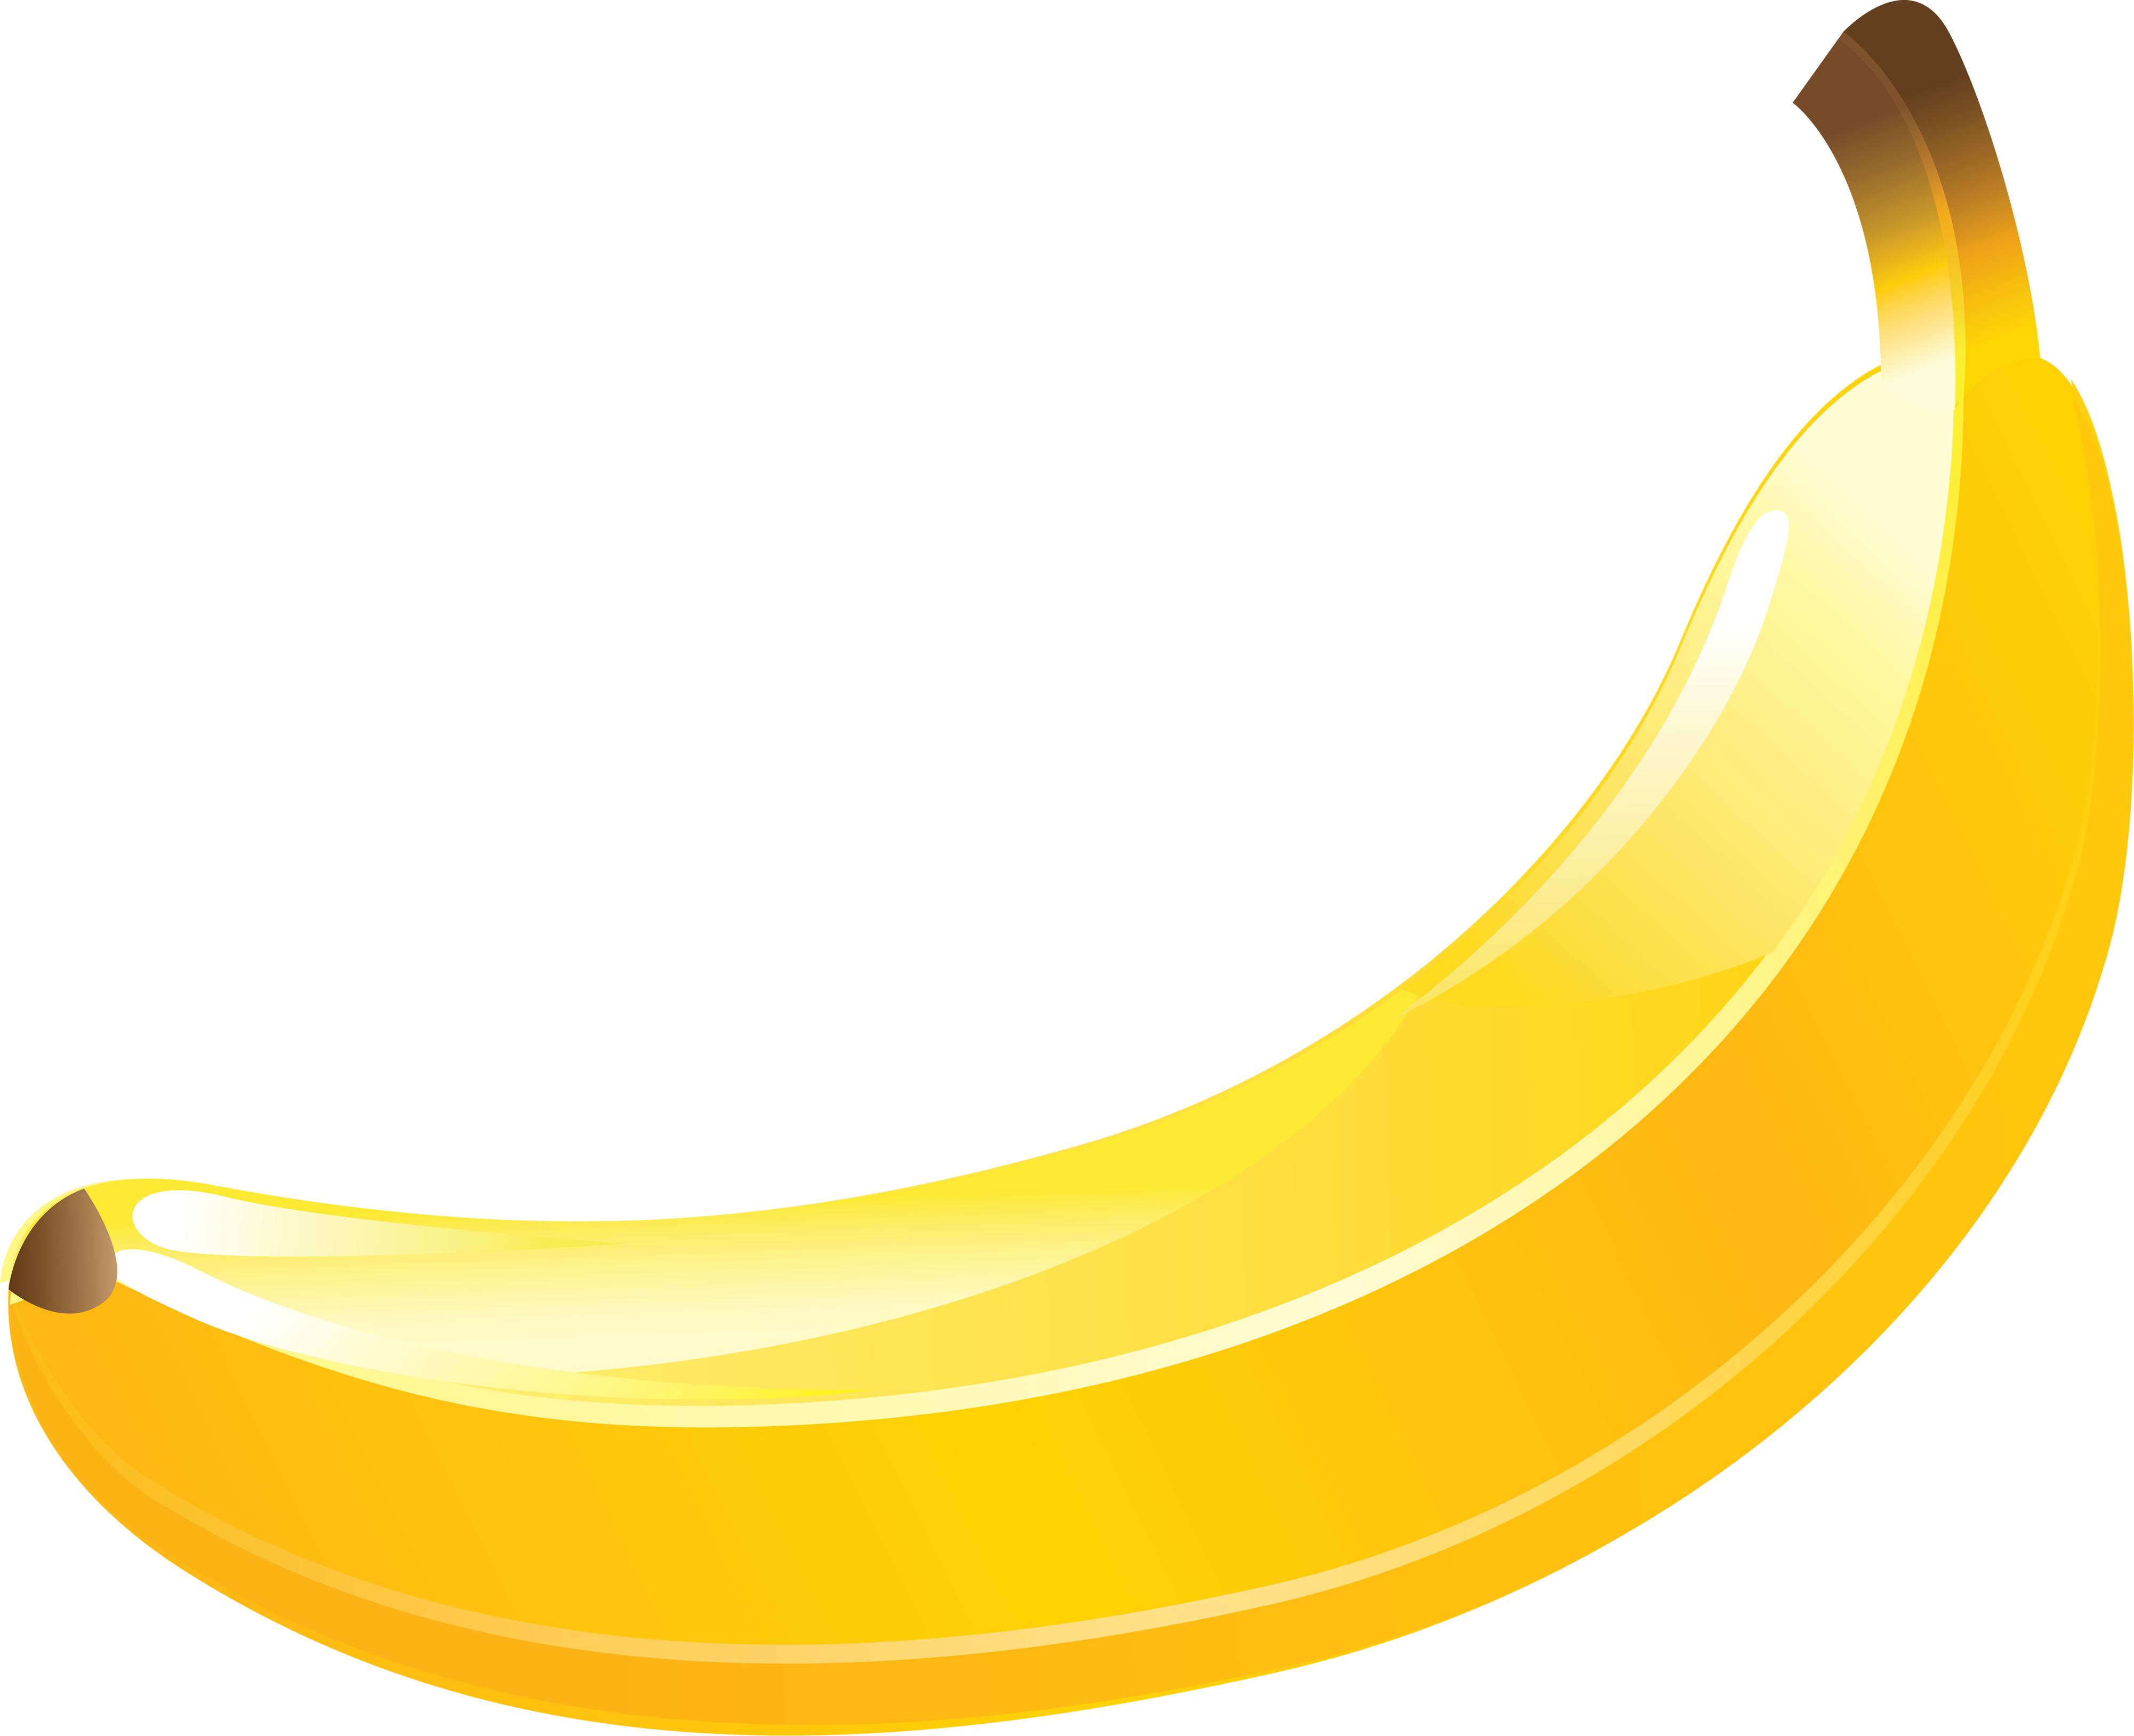 yellow banana PNG image